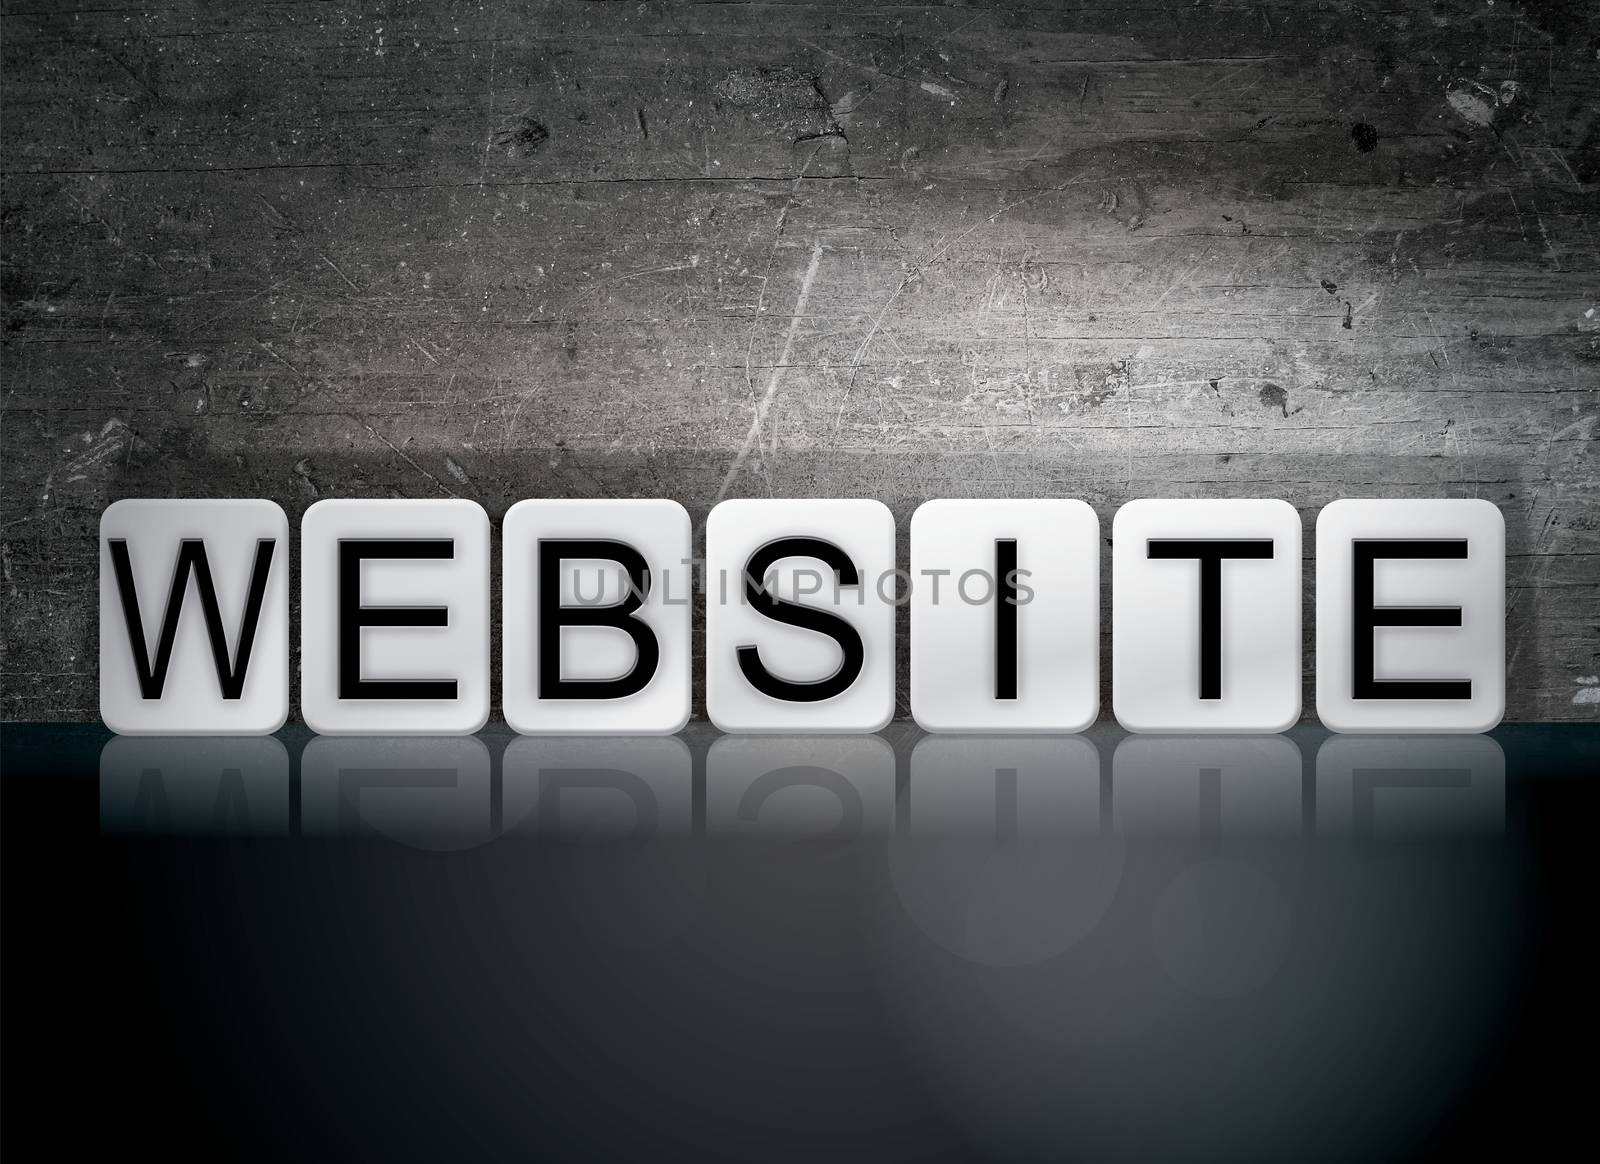 The word "Website" written in white tiles against a dark vintage grunge background.